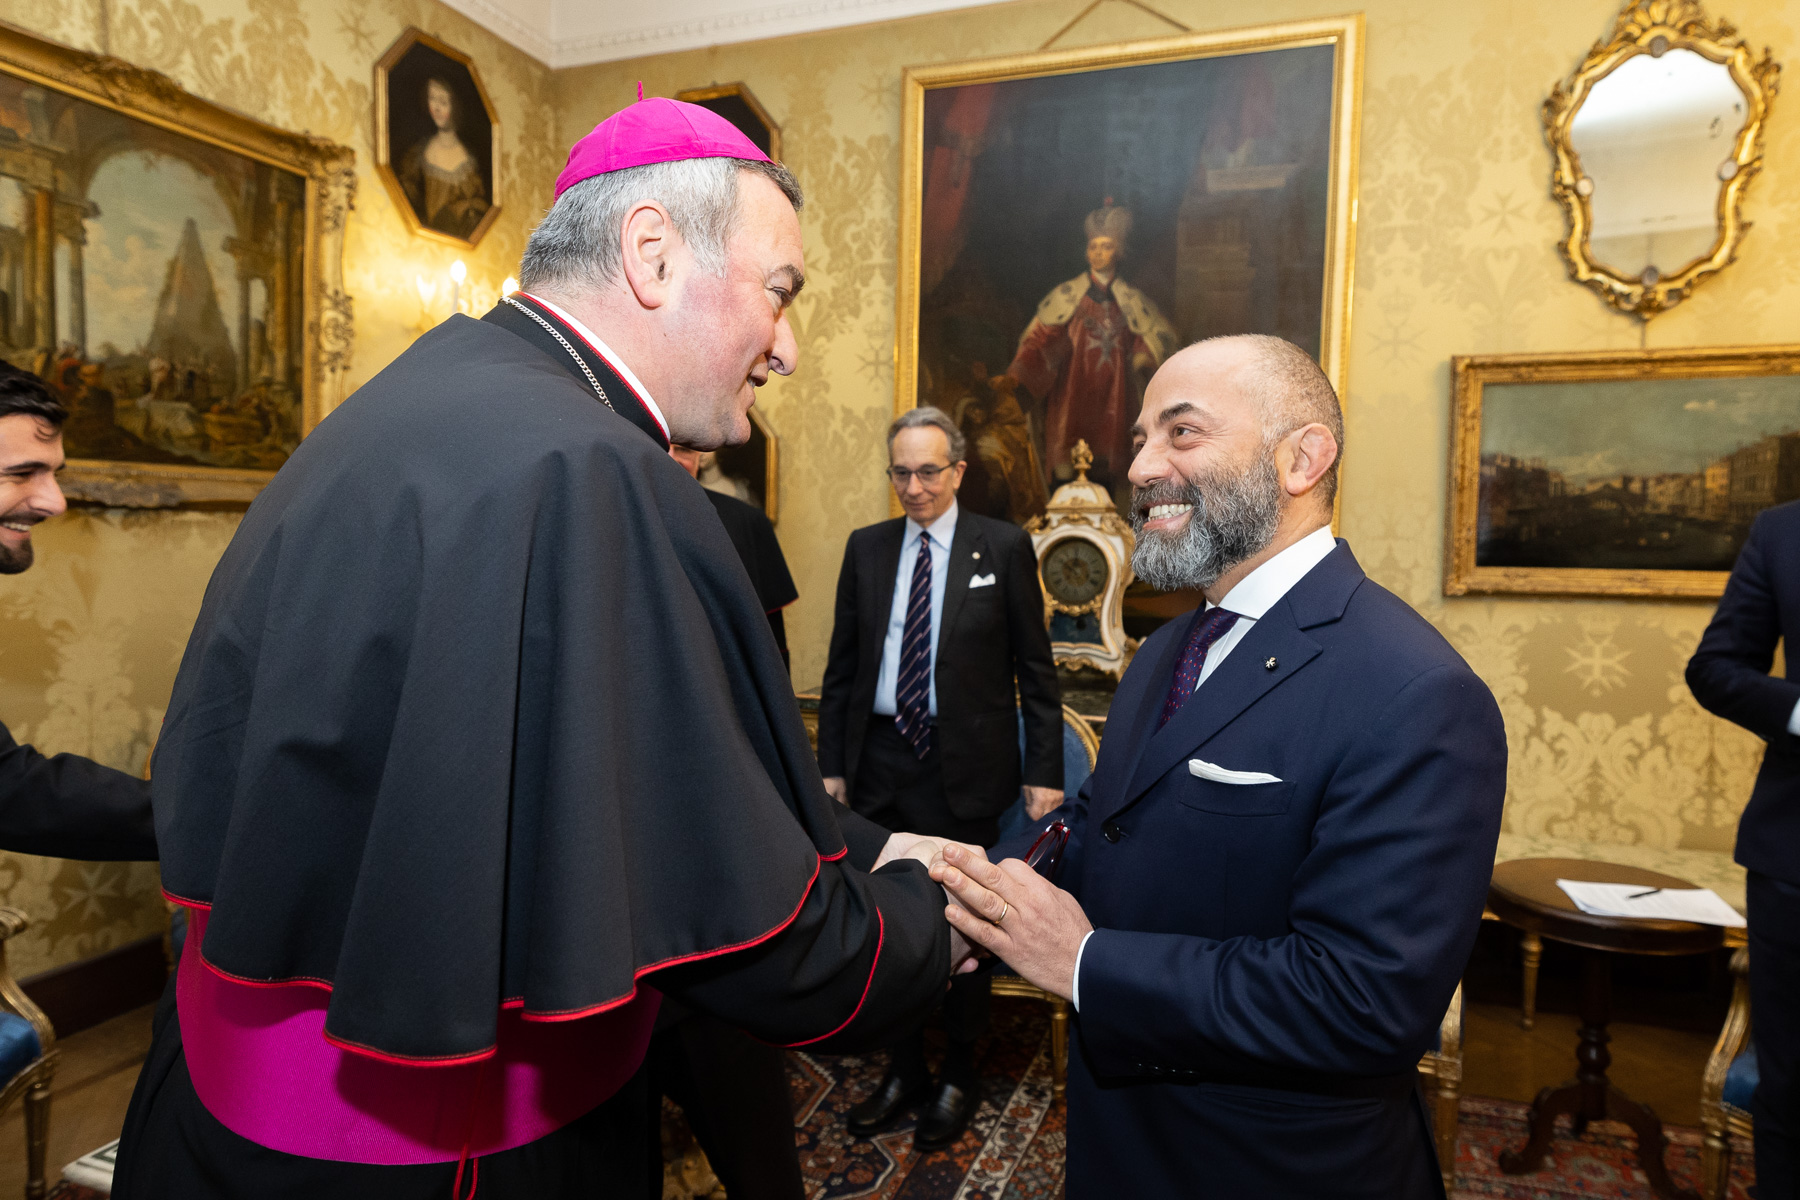 Archbishop of Tiranë-Durrës Mgr. Arjan Dodaj received by Grand Chancellor and Grand Hospitaller